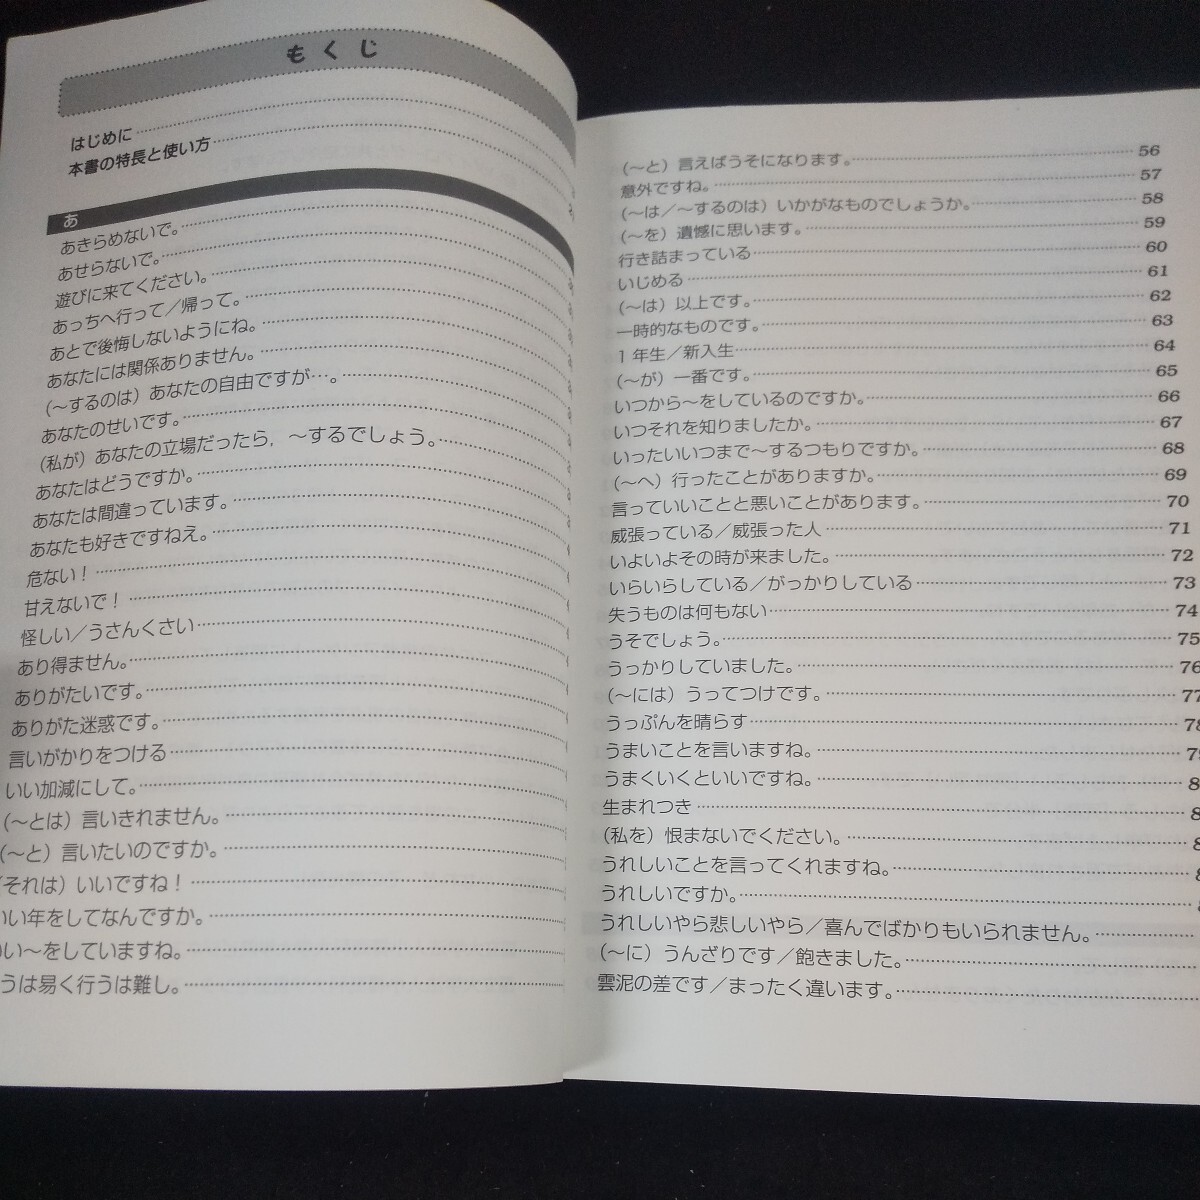 m-522 日本語から引ける ネイティブがよく使う 英会話表現ランキング 語研 2009年発行 日常会話 決まり文句 フレーズ※10_画像5